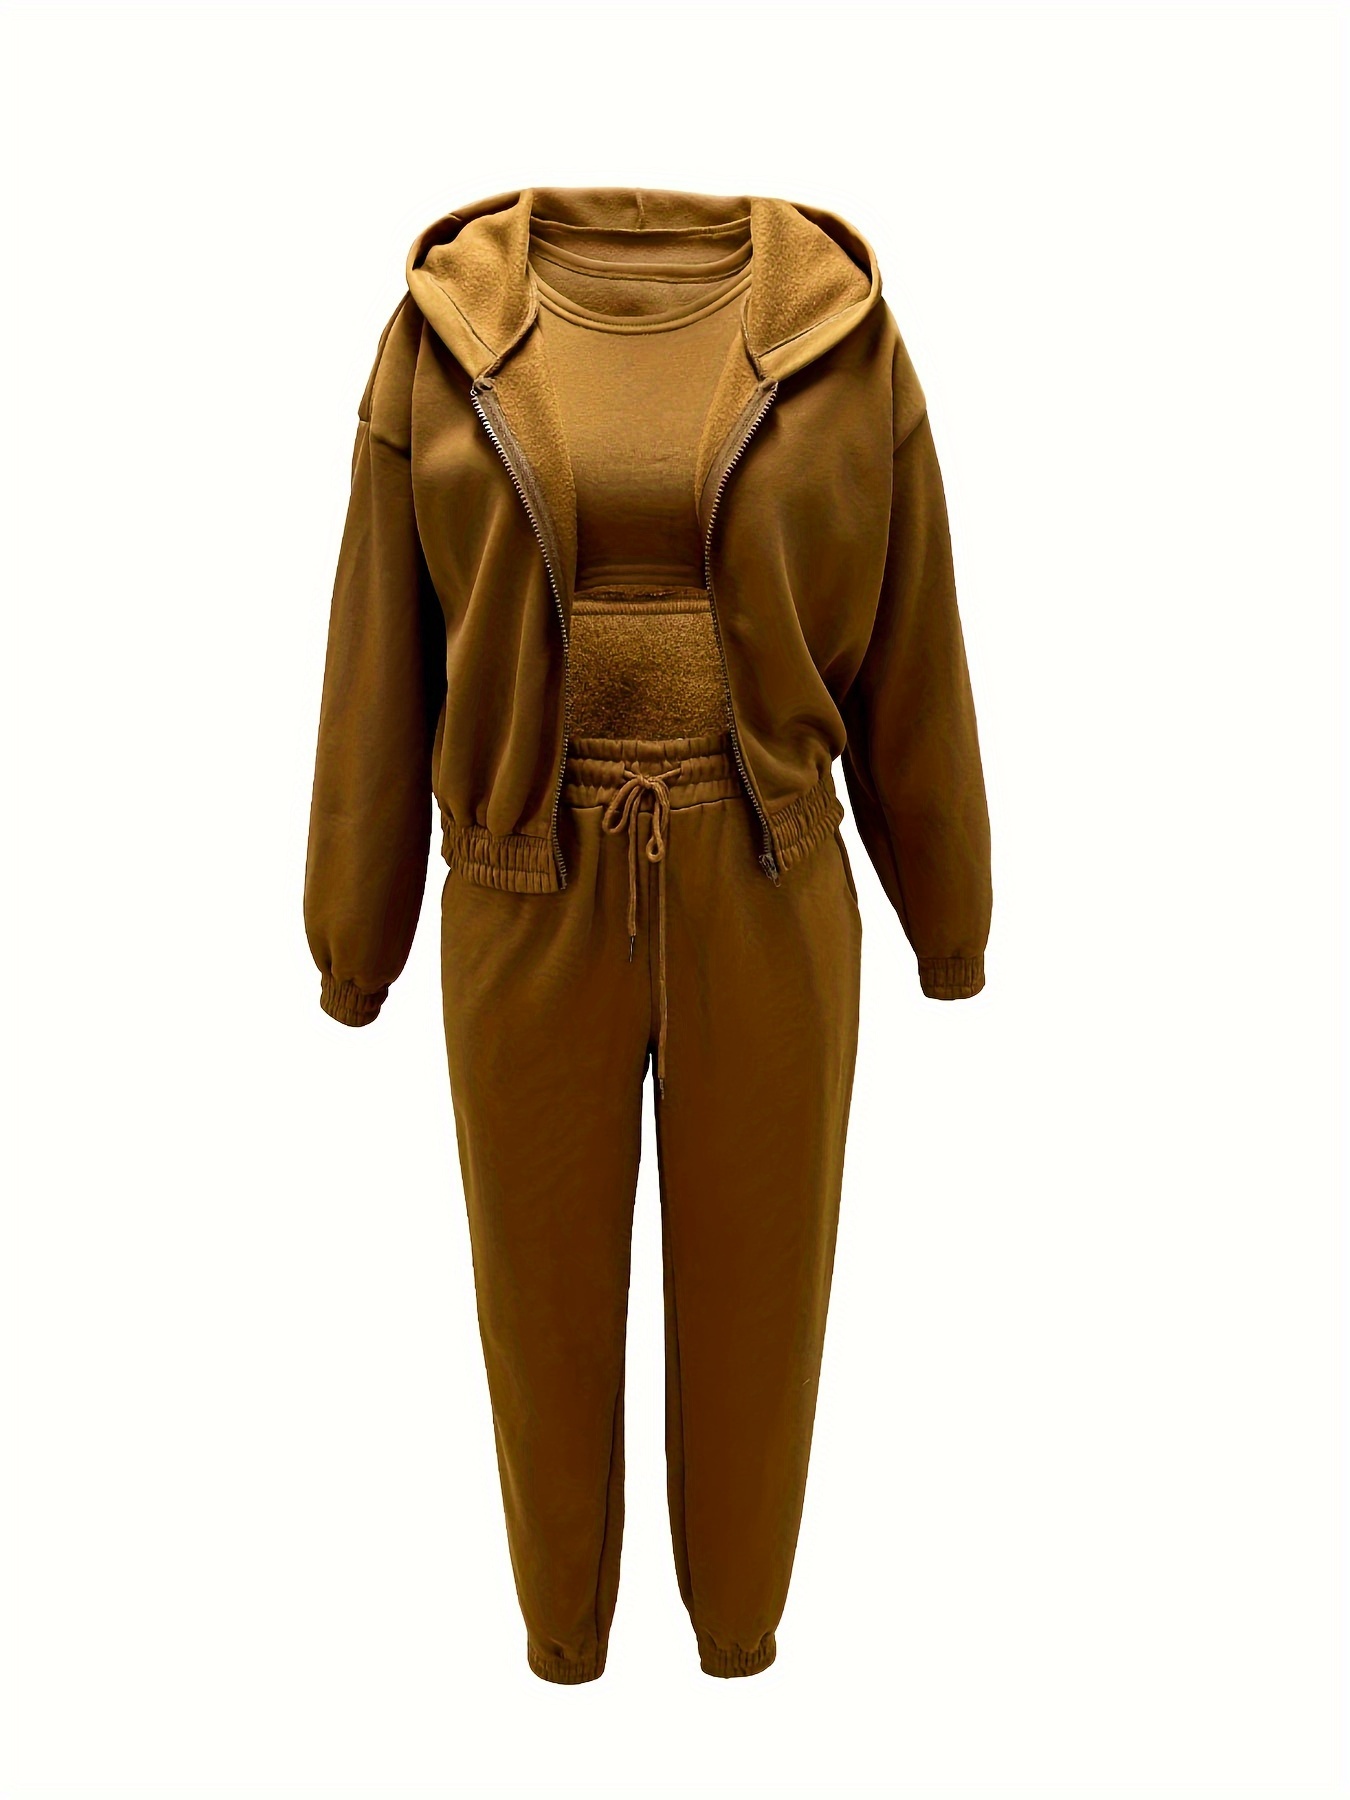 YWDJ 2 Piece Outfits for Women Pants Sets Elegant Hooded Zipper